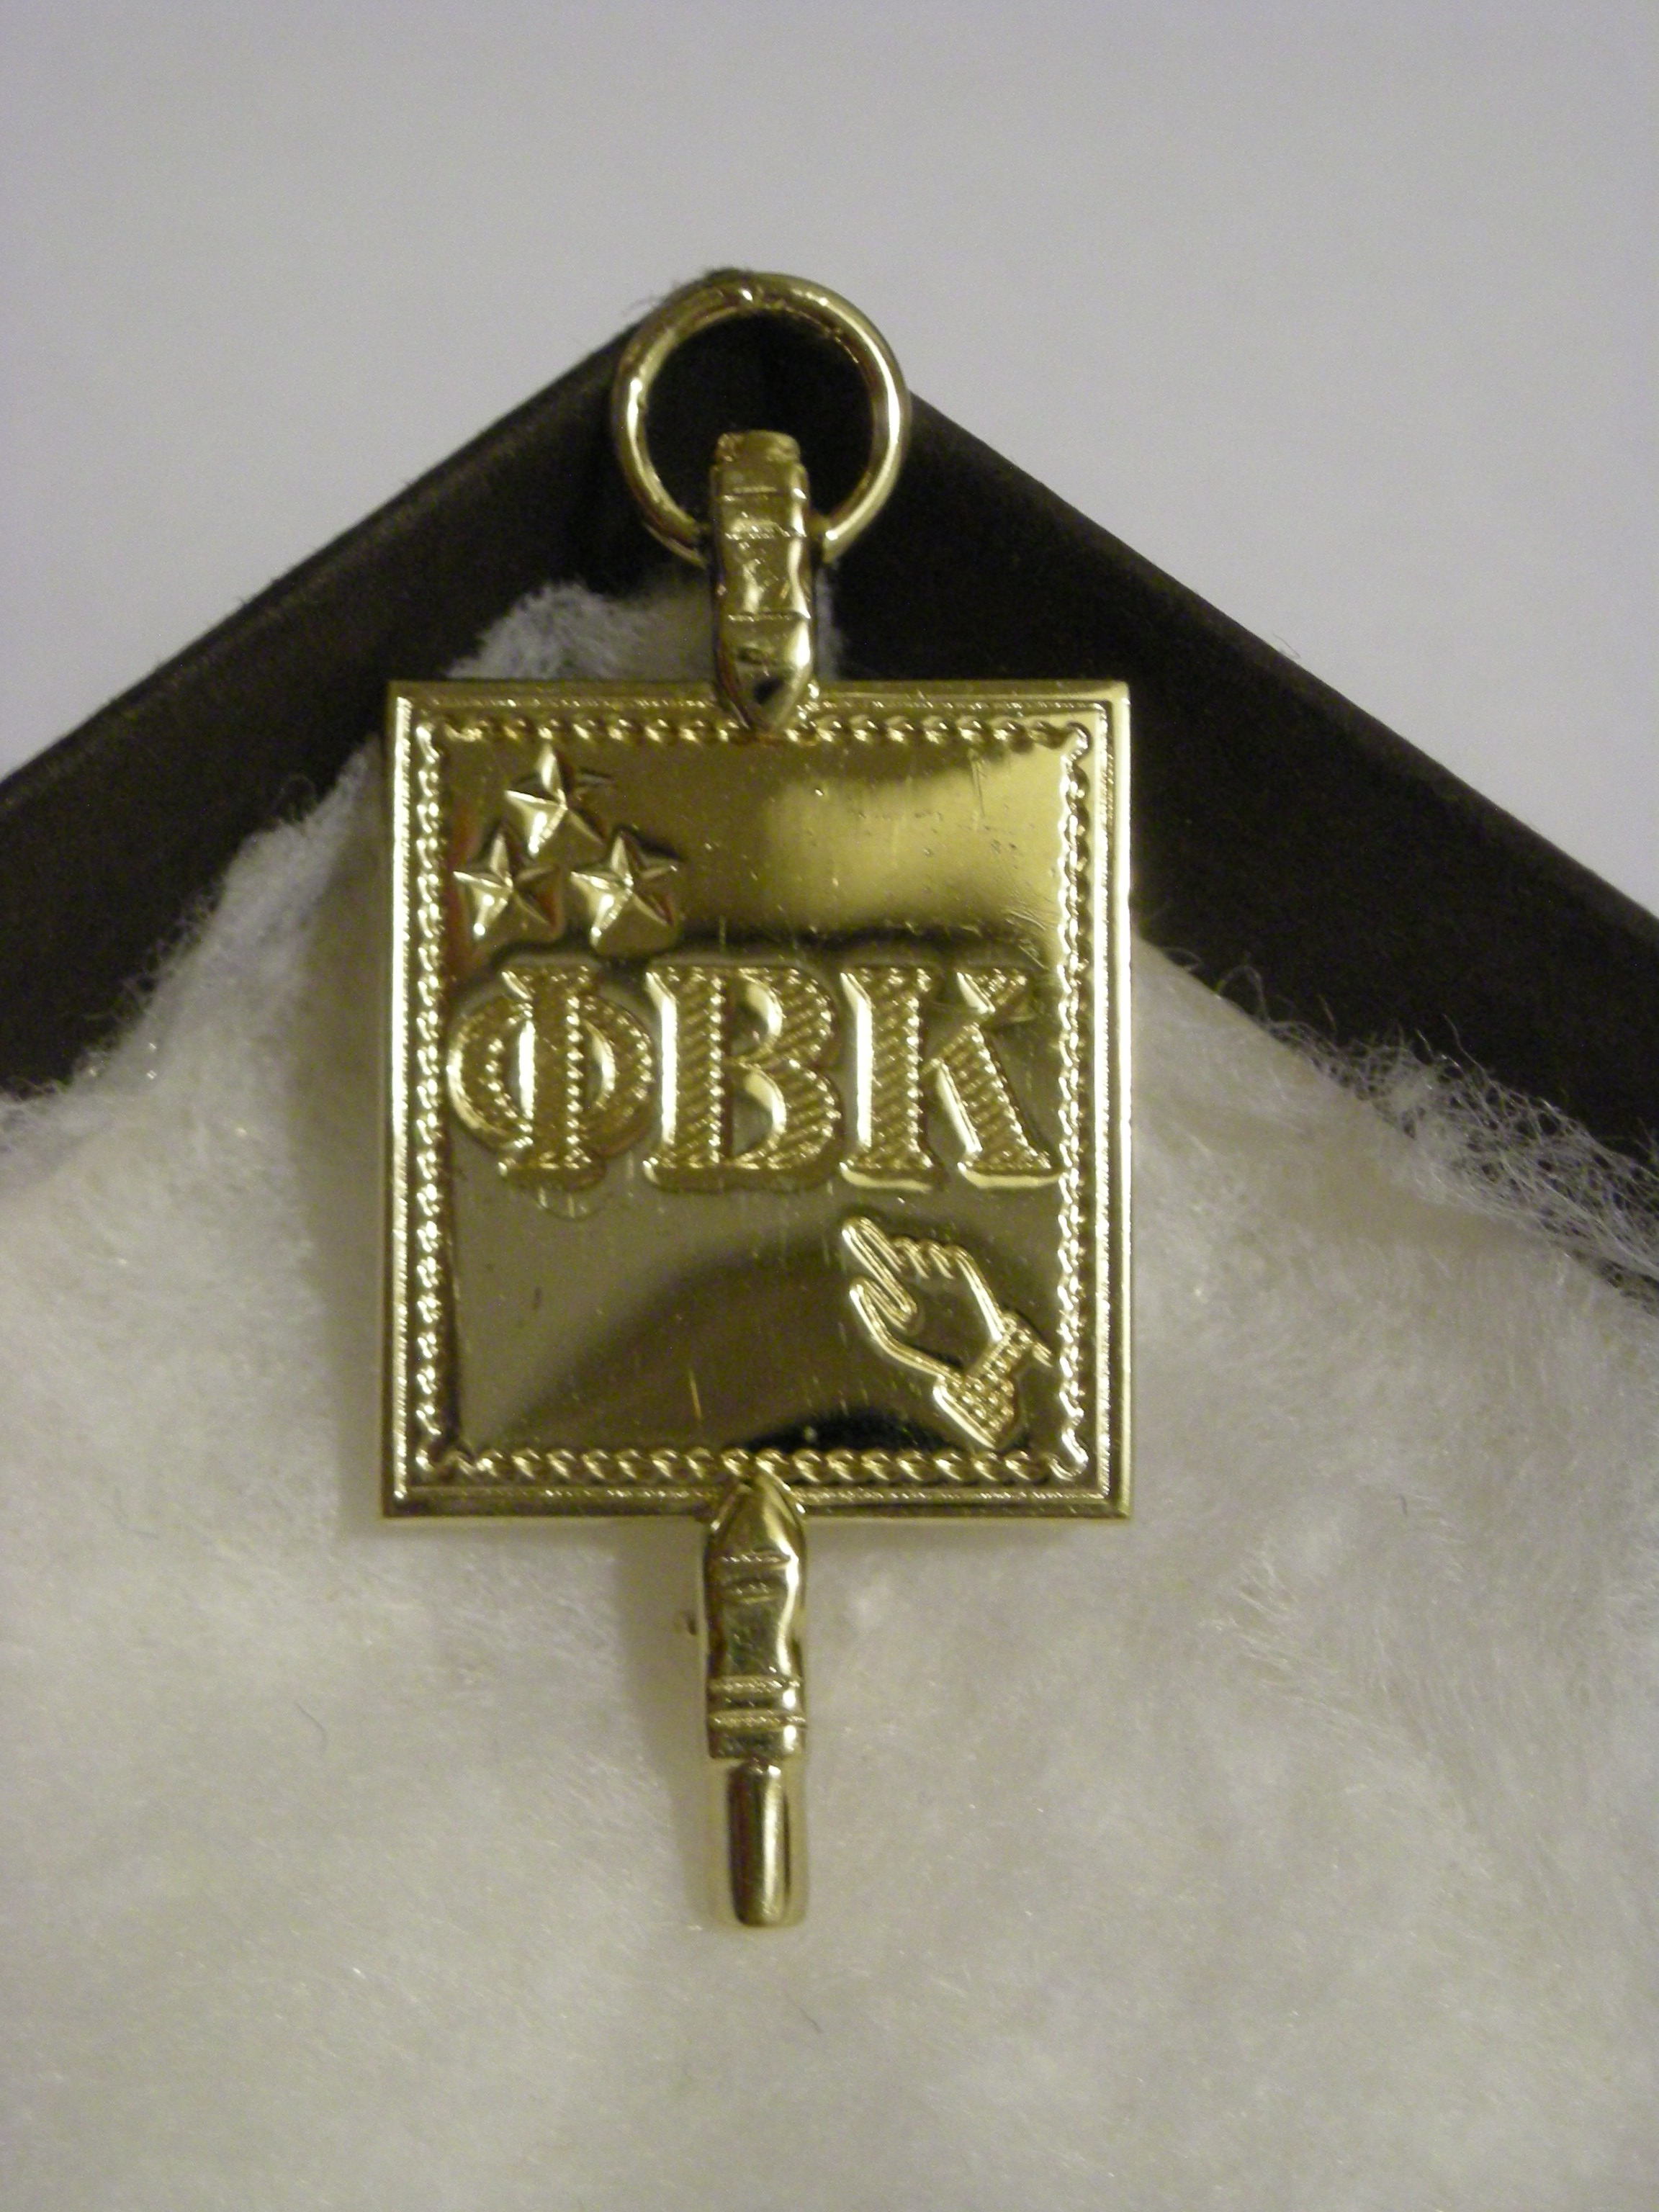 File:Phi Beta Kappa Key.JPG Wikimedia Commons